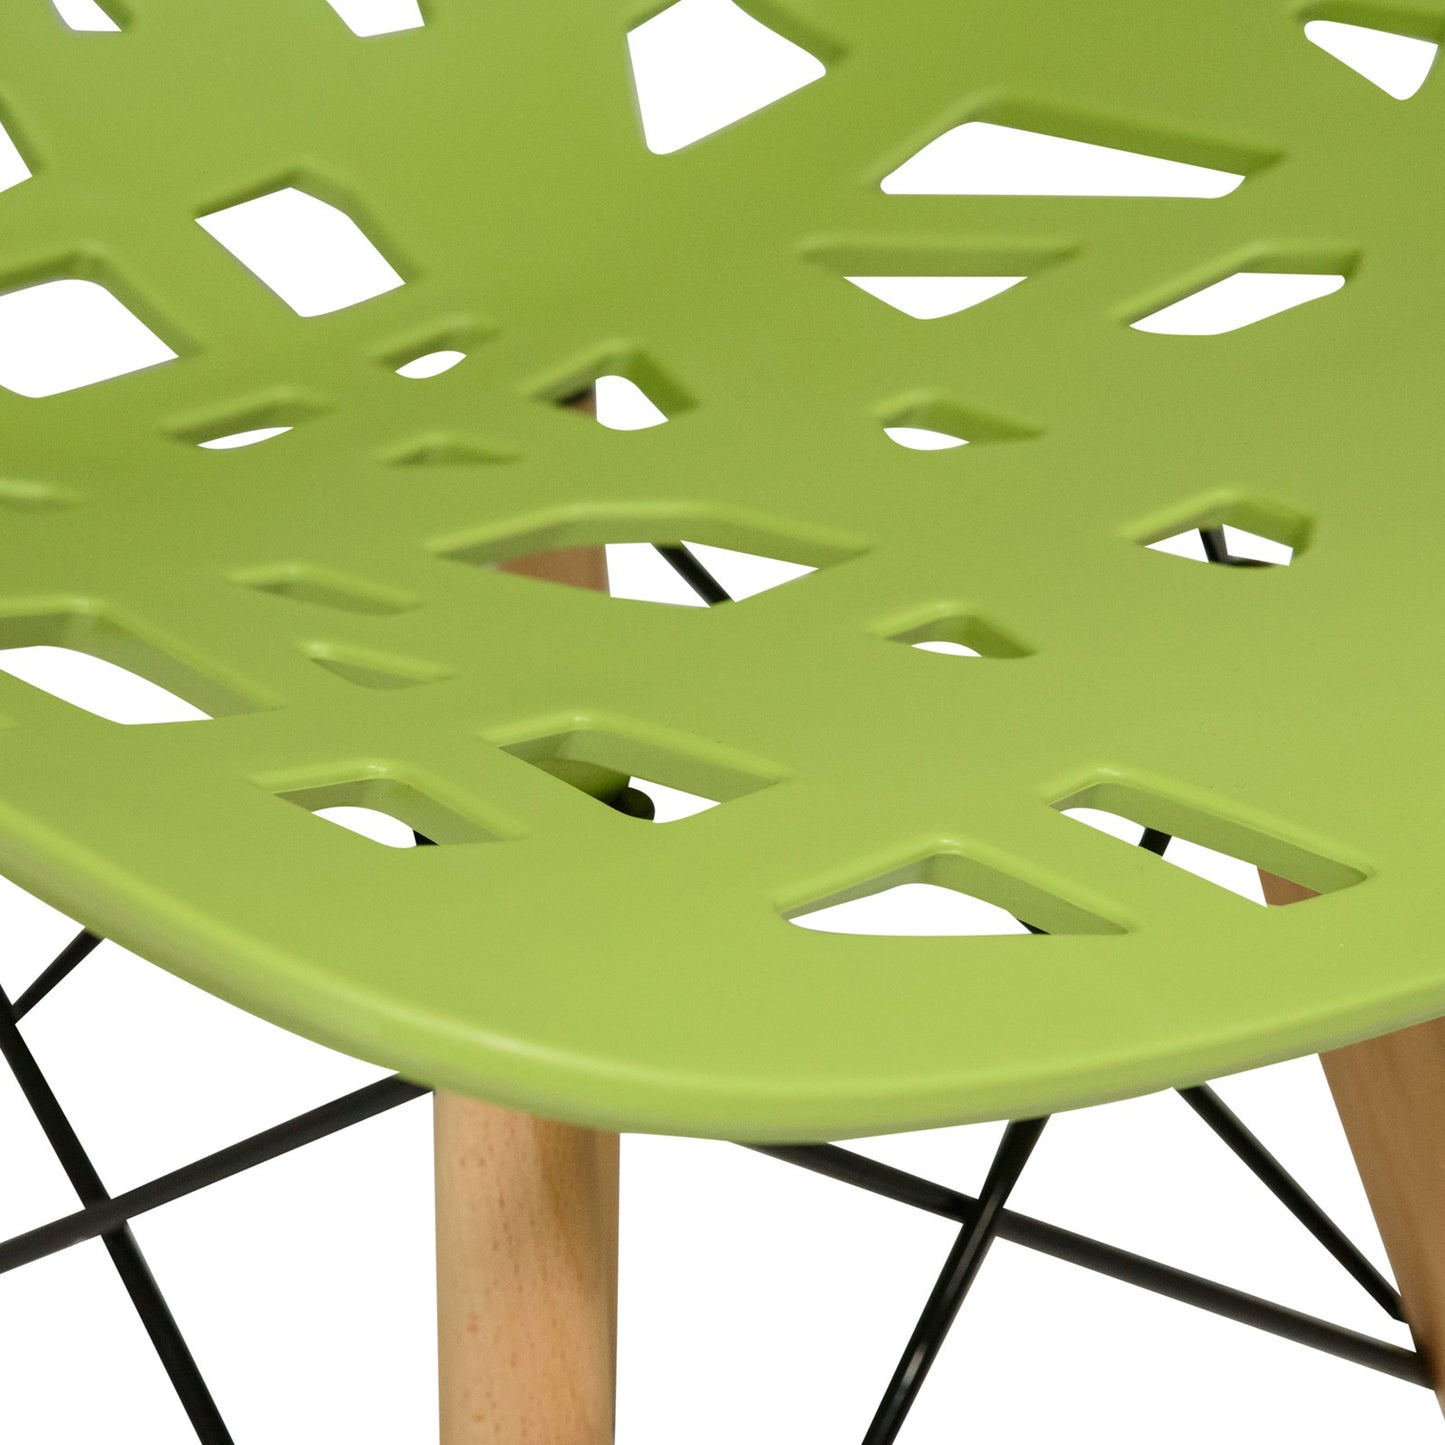 Akira Green Chair with Dowel Legs - living-essentials